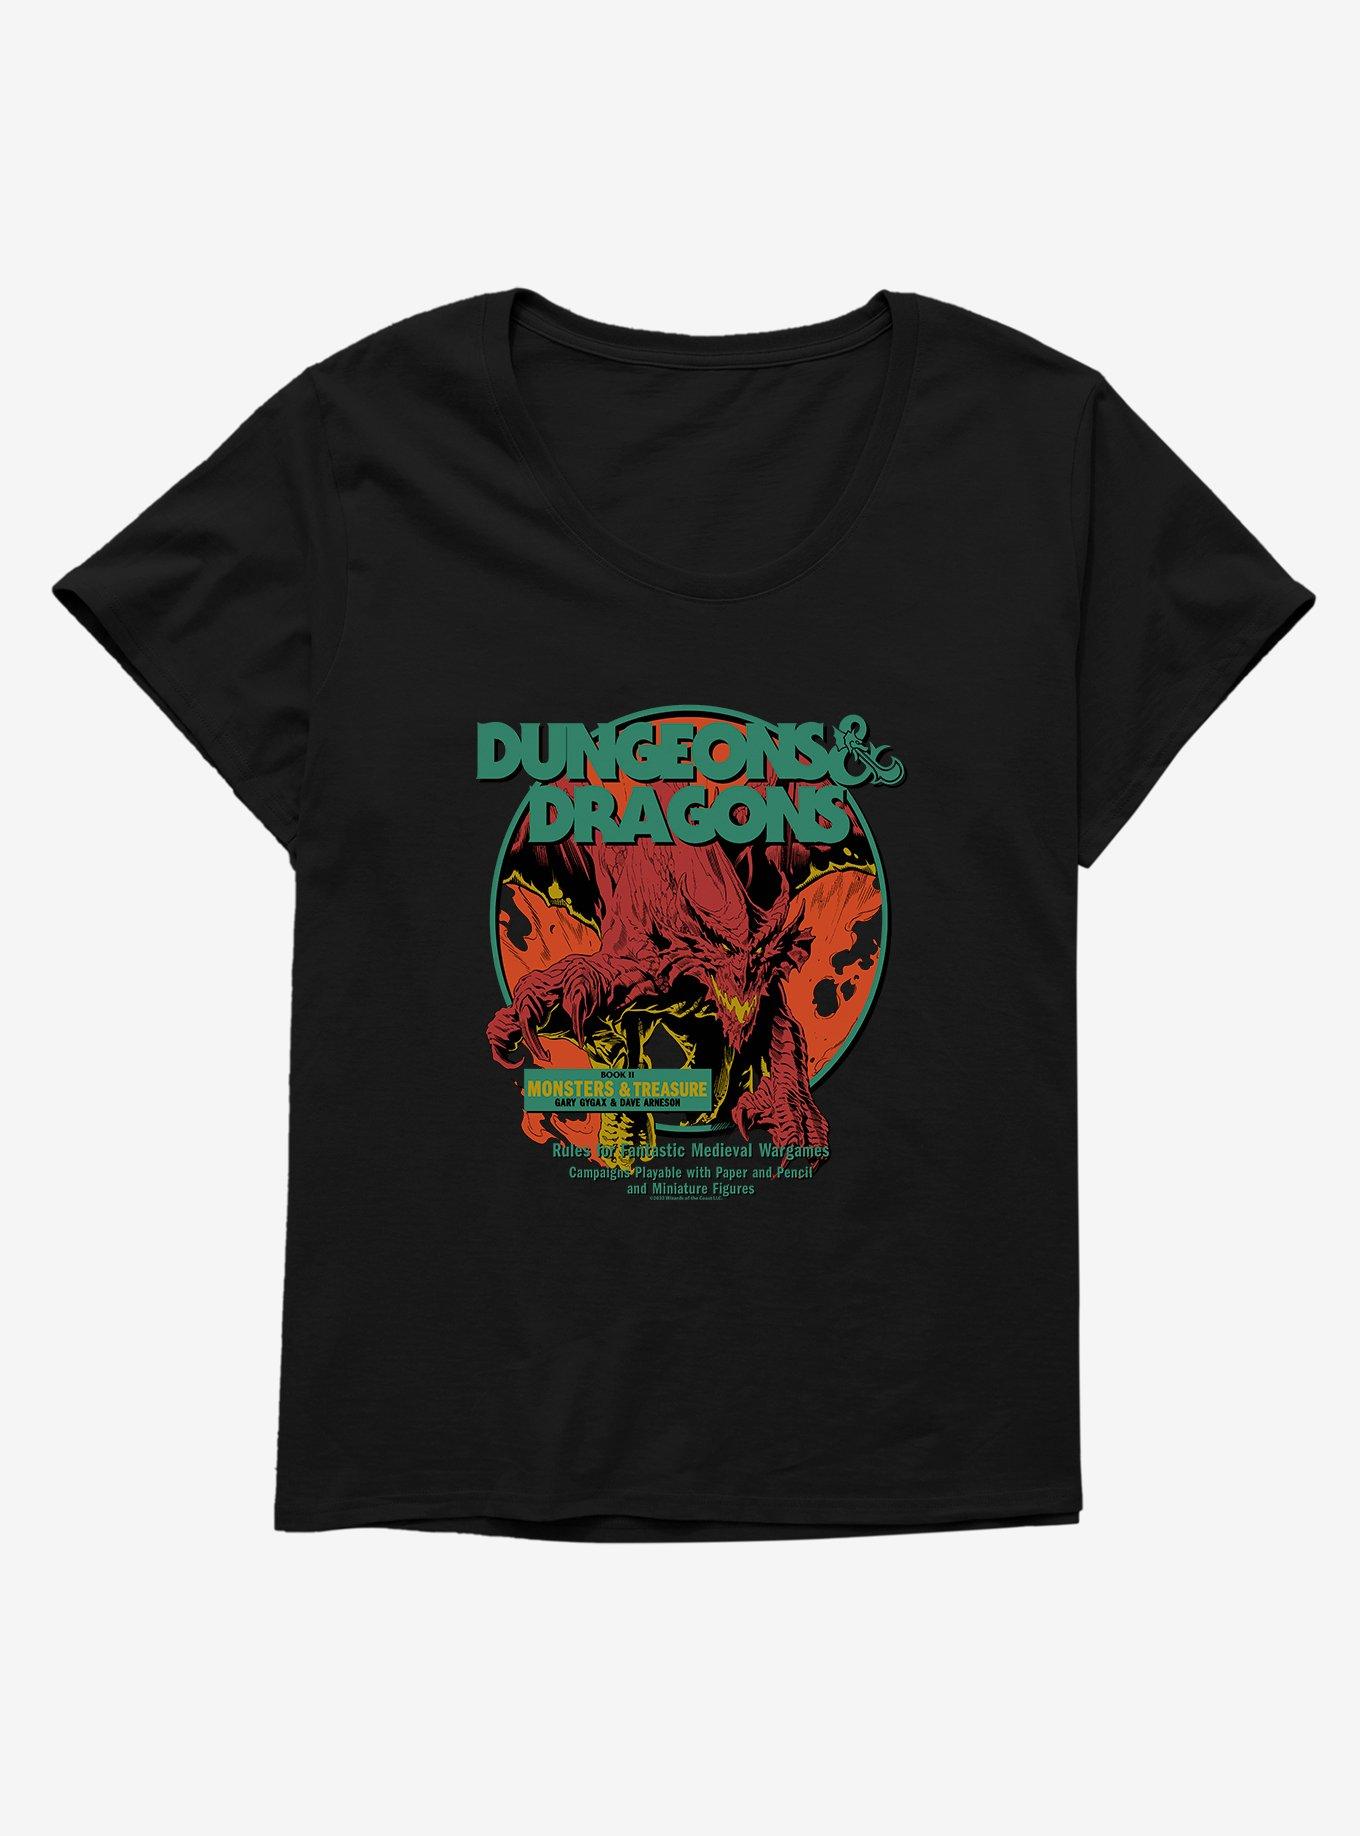 Dungeons & Dragons Book II Monsters & Treasure Womens T-Shirt Plus Size, BLACK, hi-res